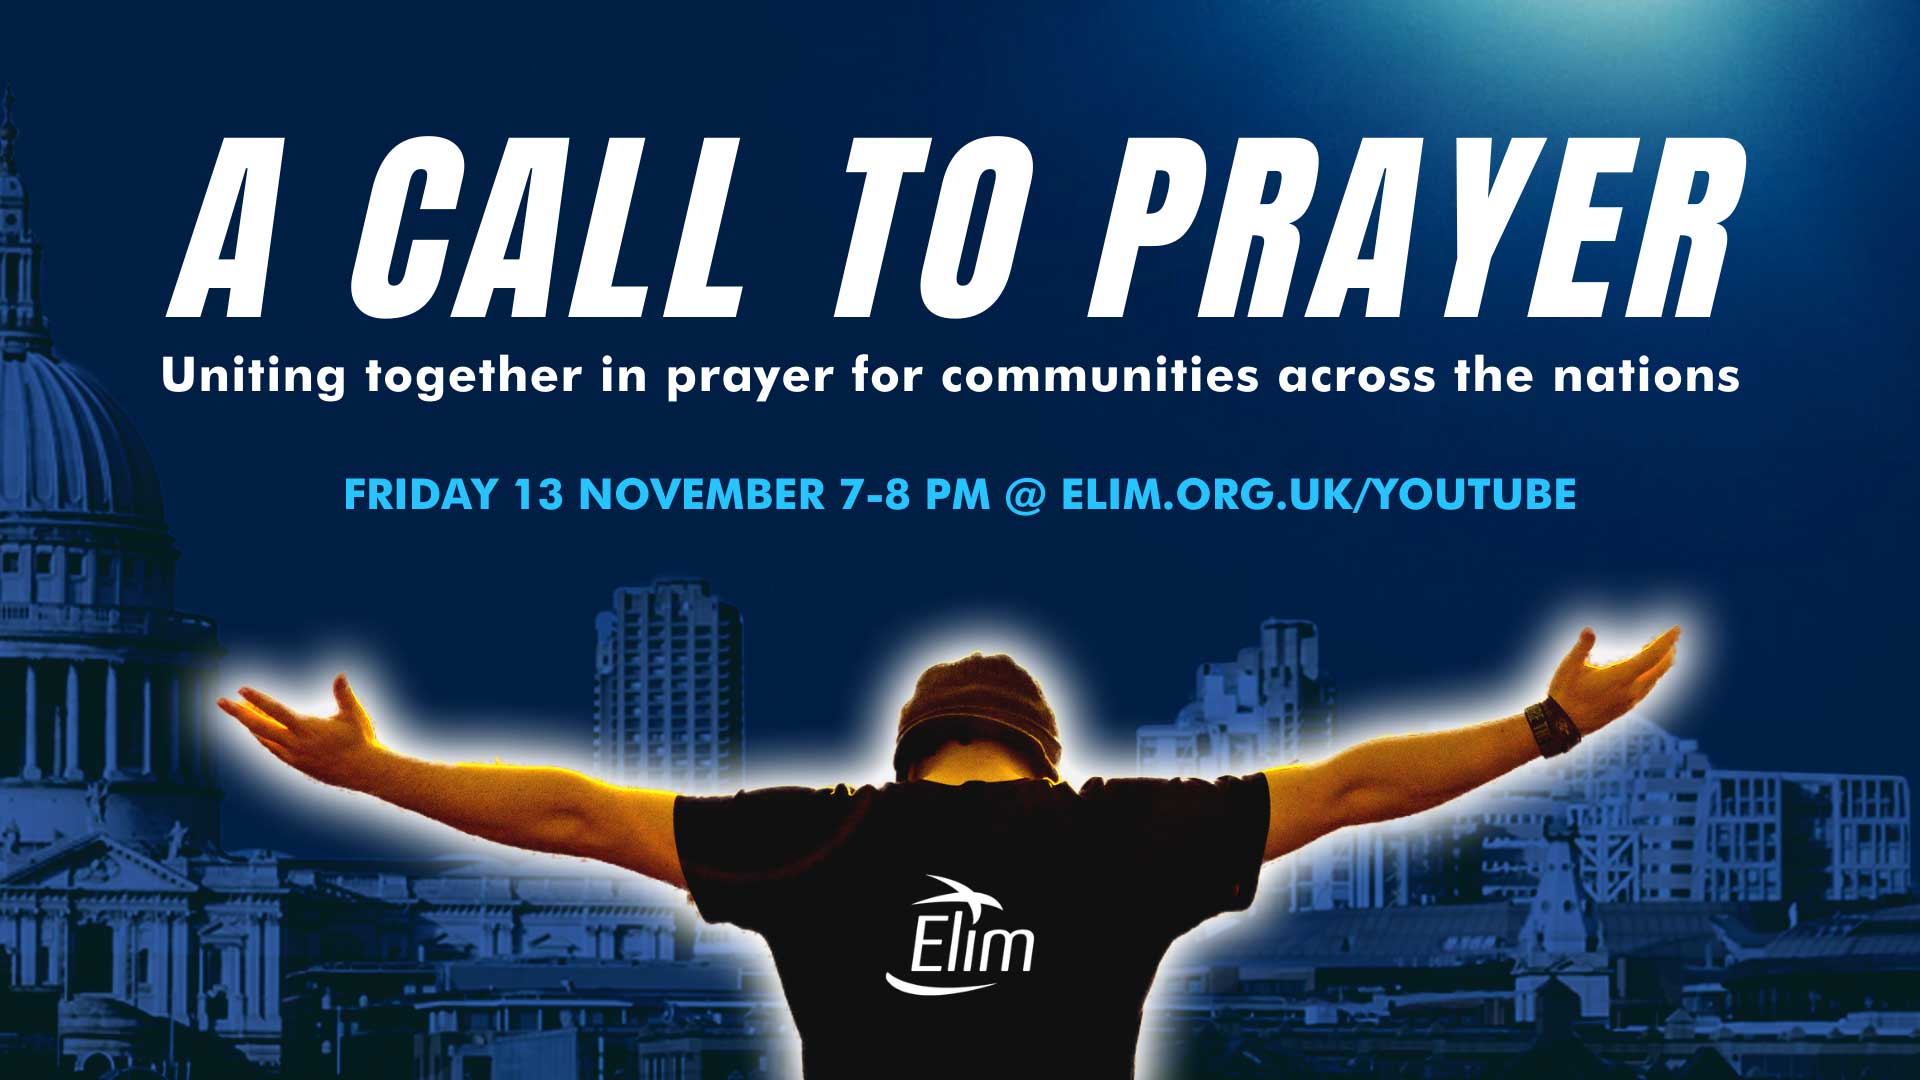 A call to prayer on Friday 13 November 2020